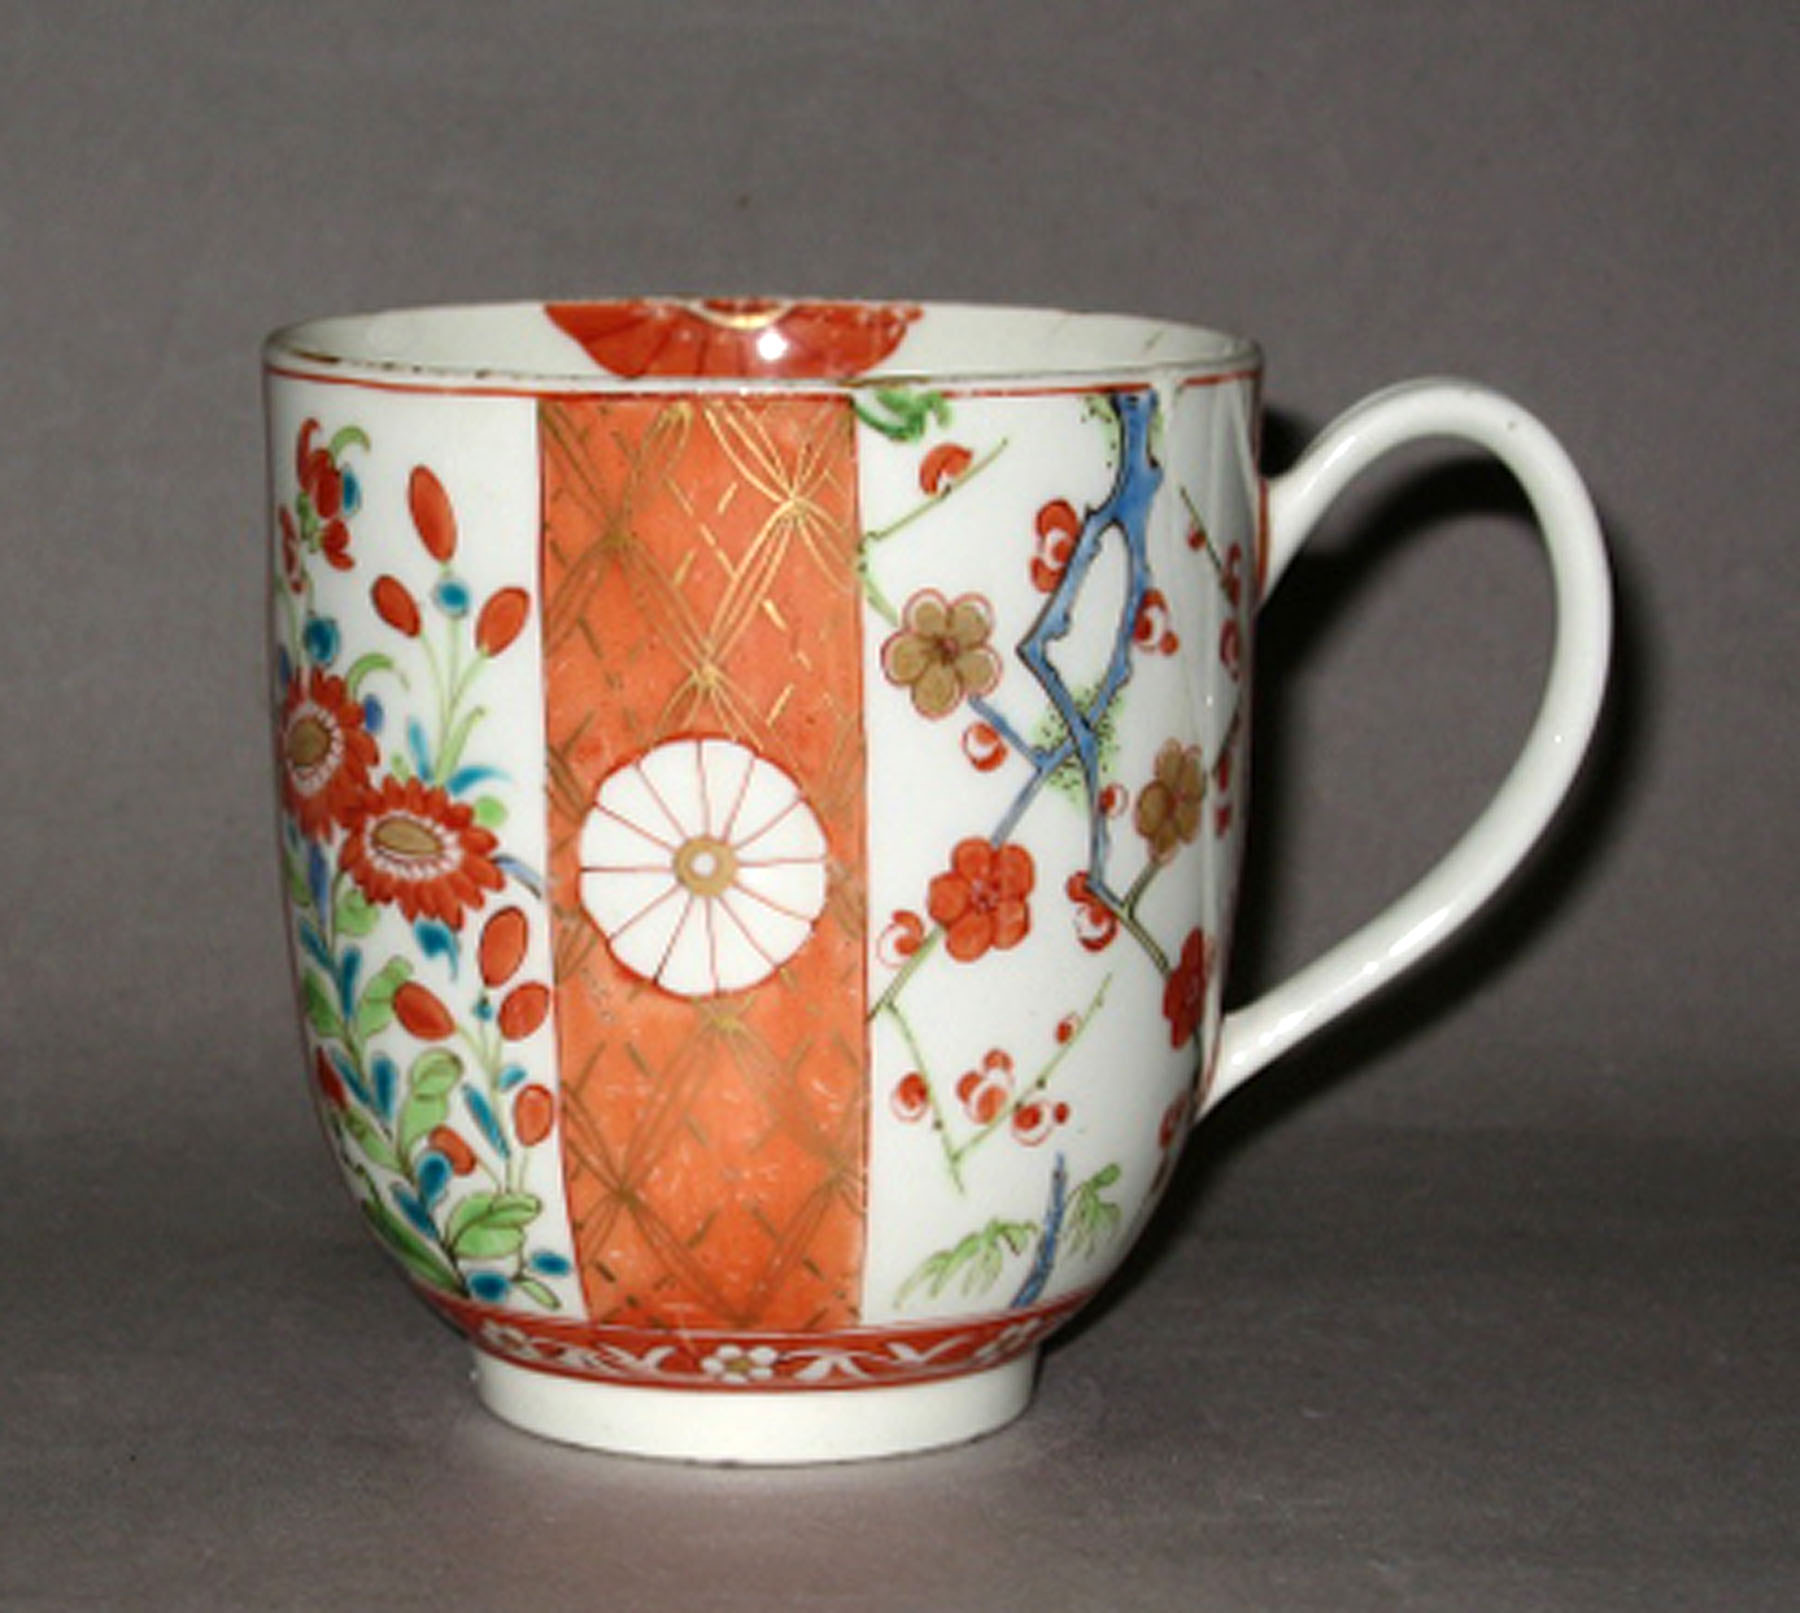 1975.0189.001 Soft-paste porcelain coffee cup